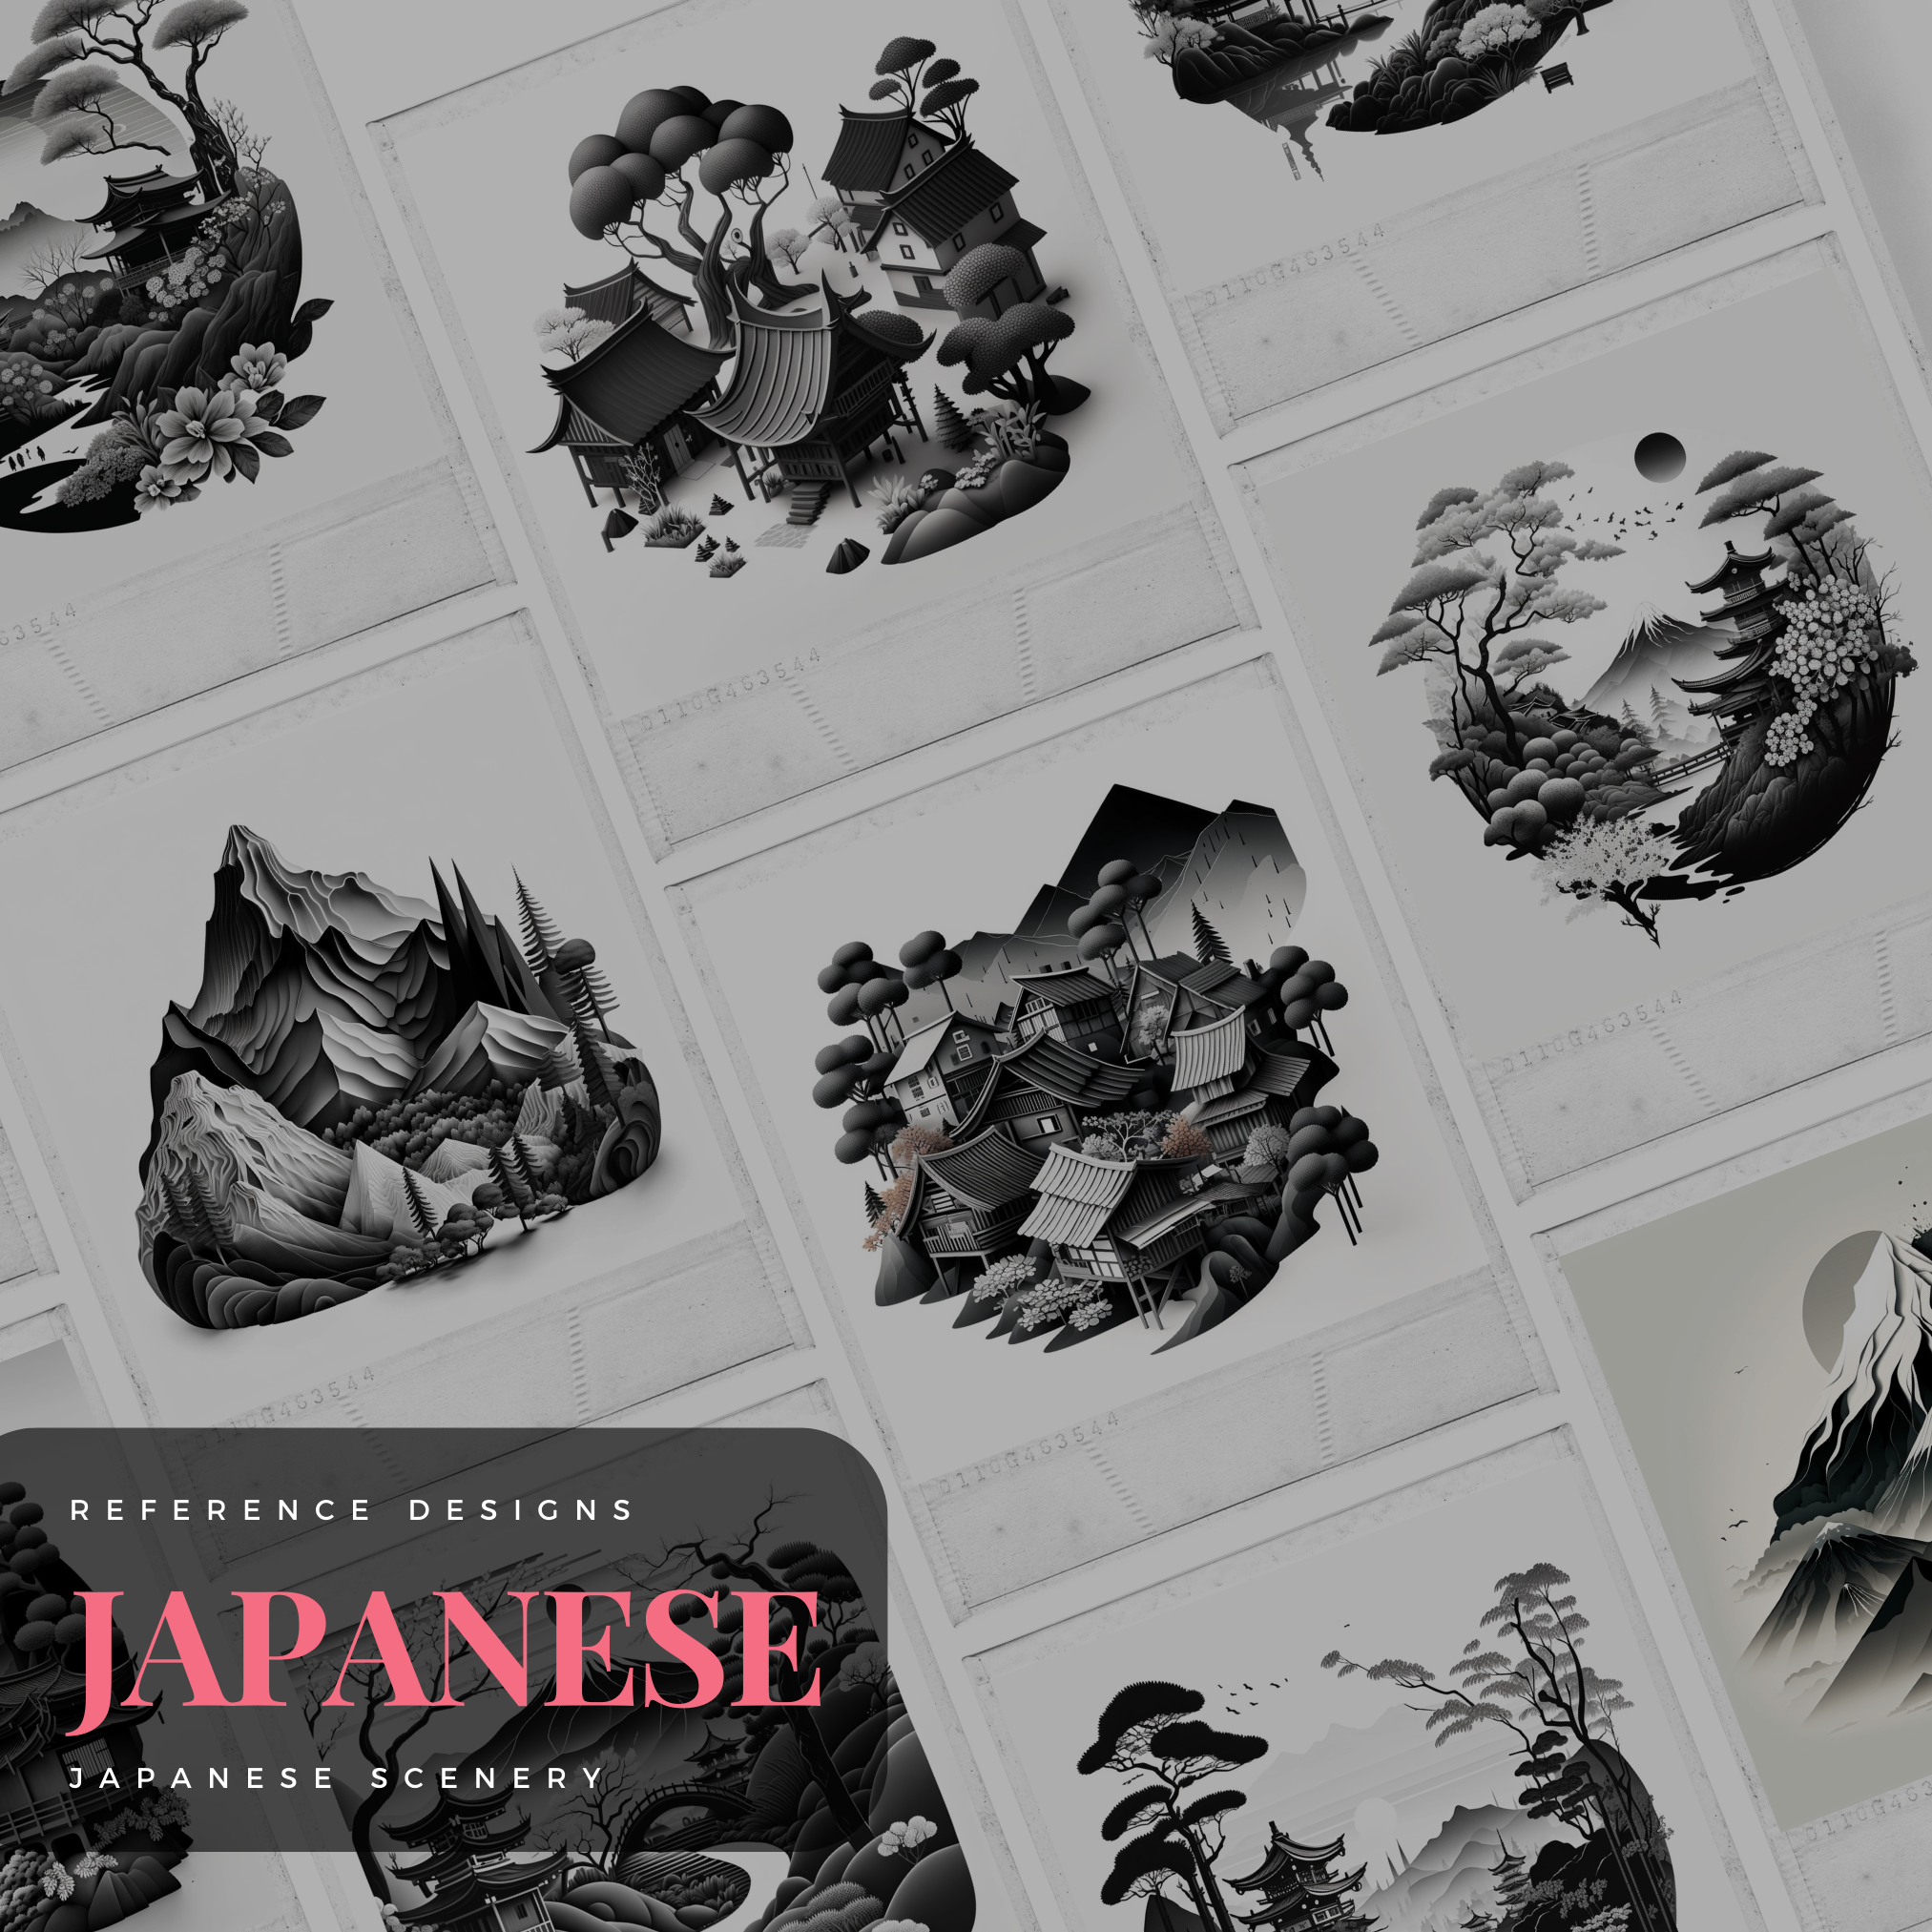 Japanese Scenery Digital Reference Design Collection: 50 Procreate & Sketchbook Images